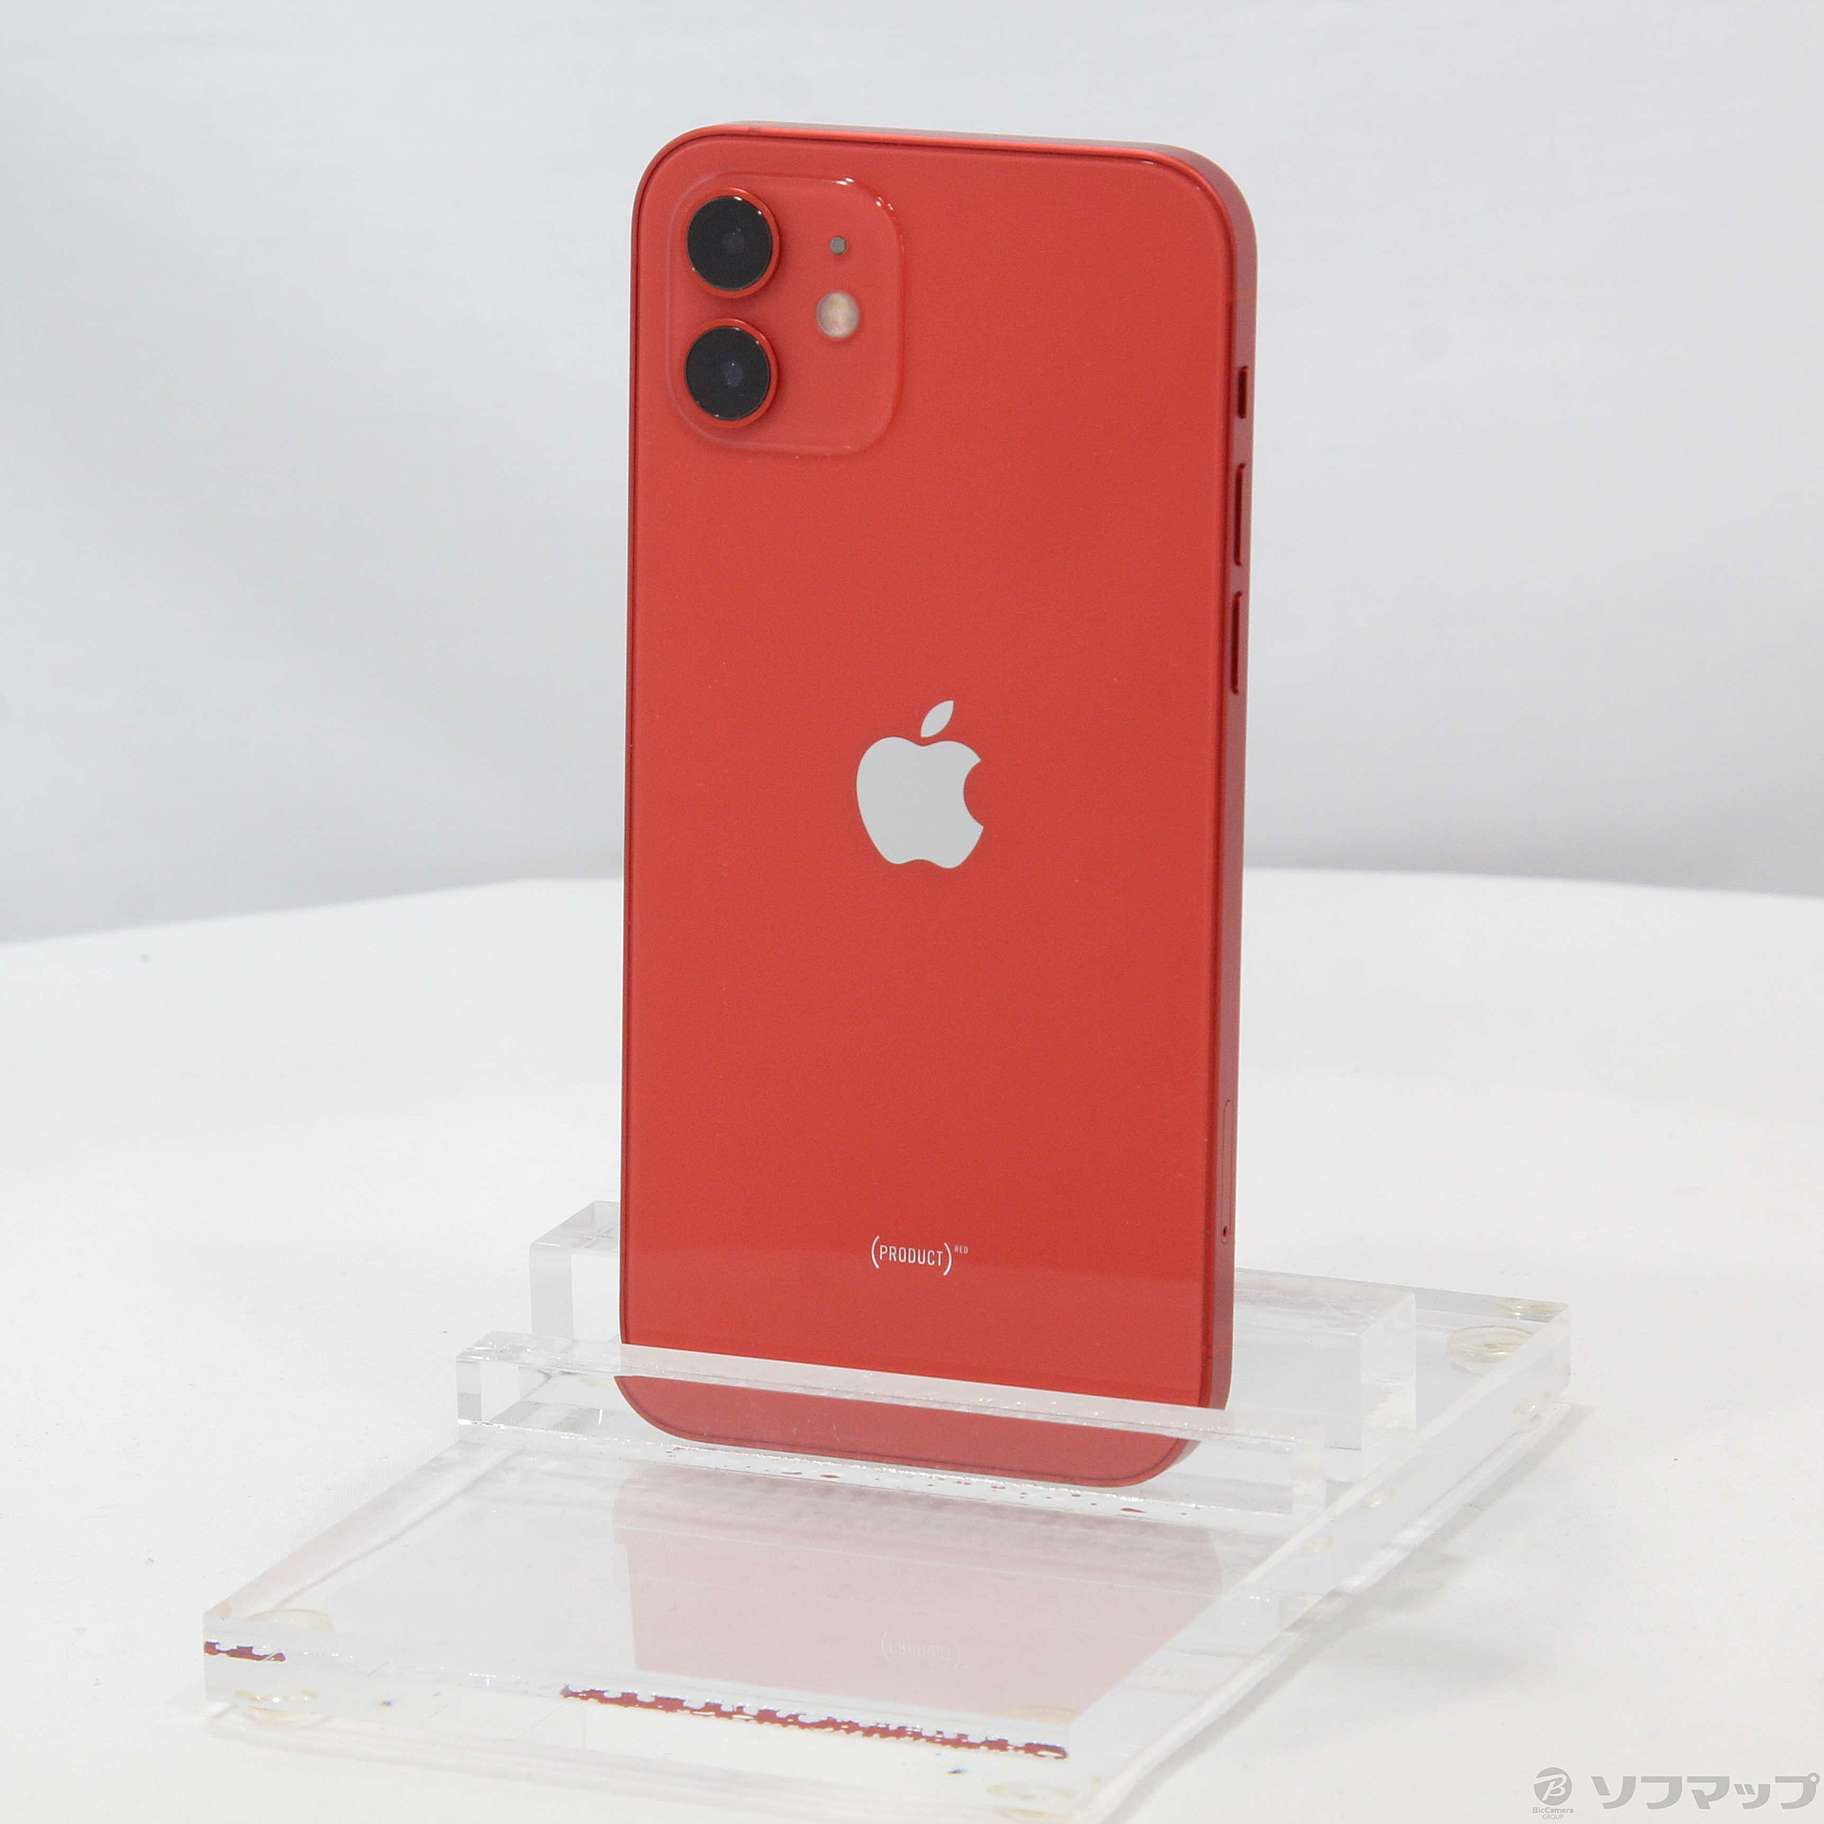 iPhone 12 (PRODUCT)RED 64GB SIMフリー [レッド] 中古(白ロム)価格